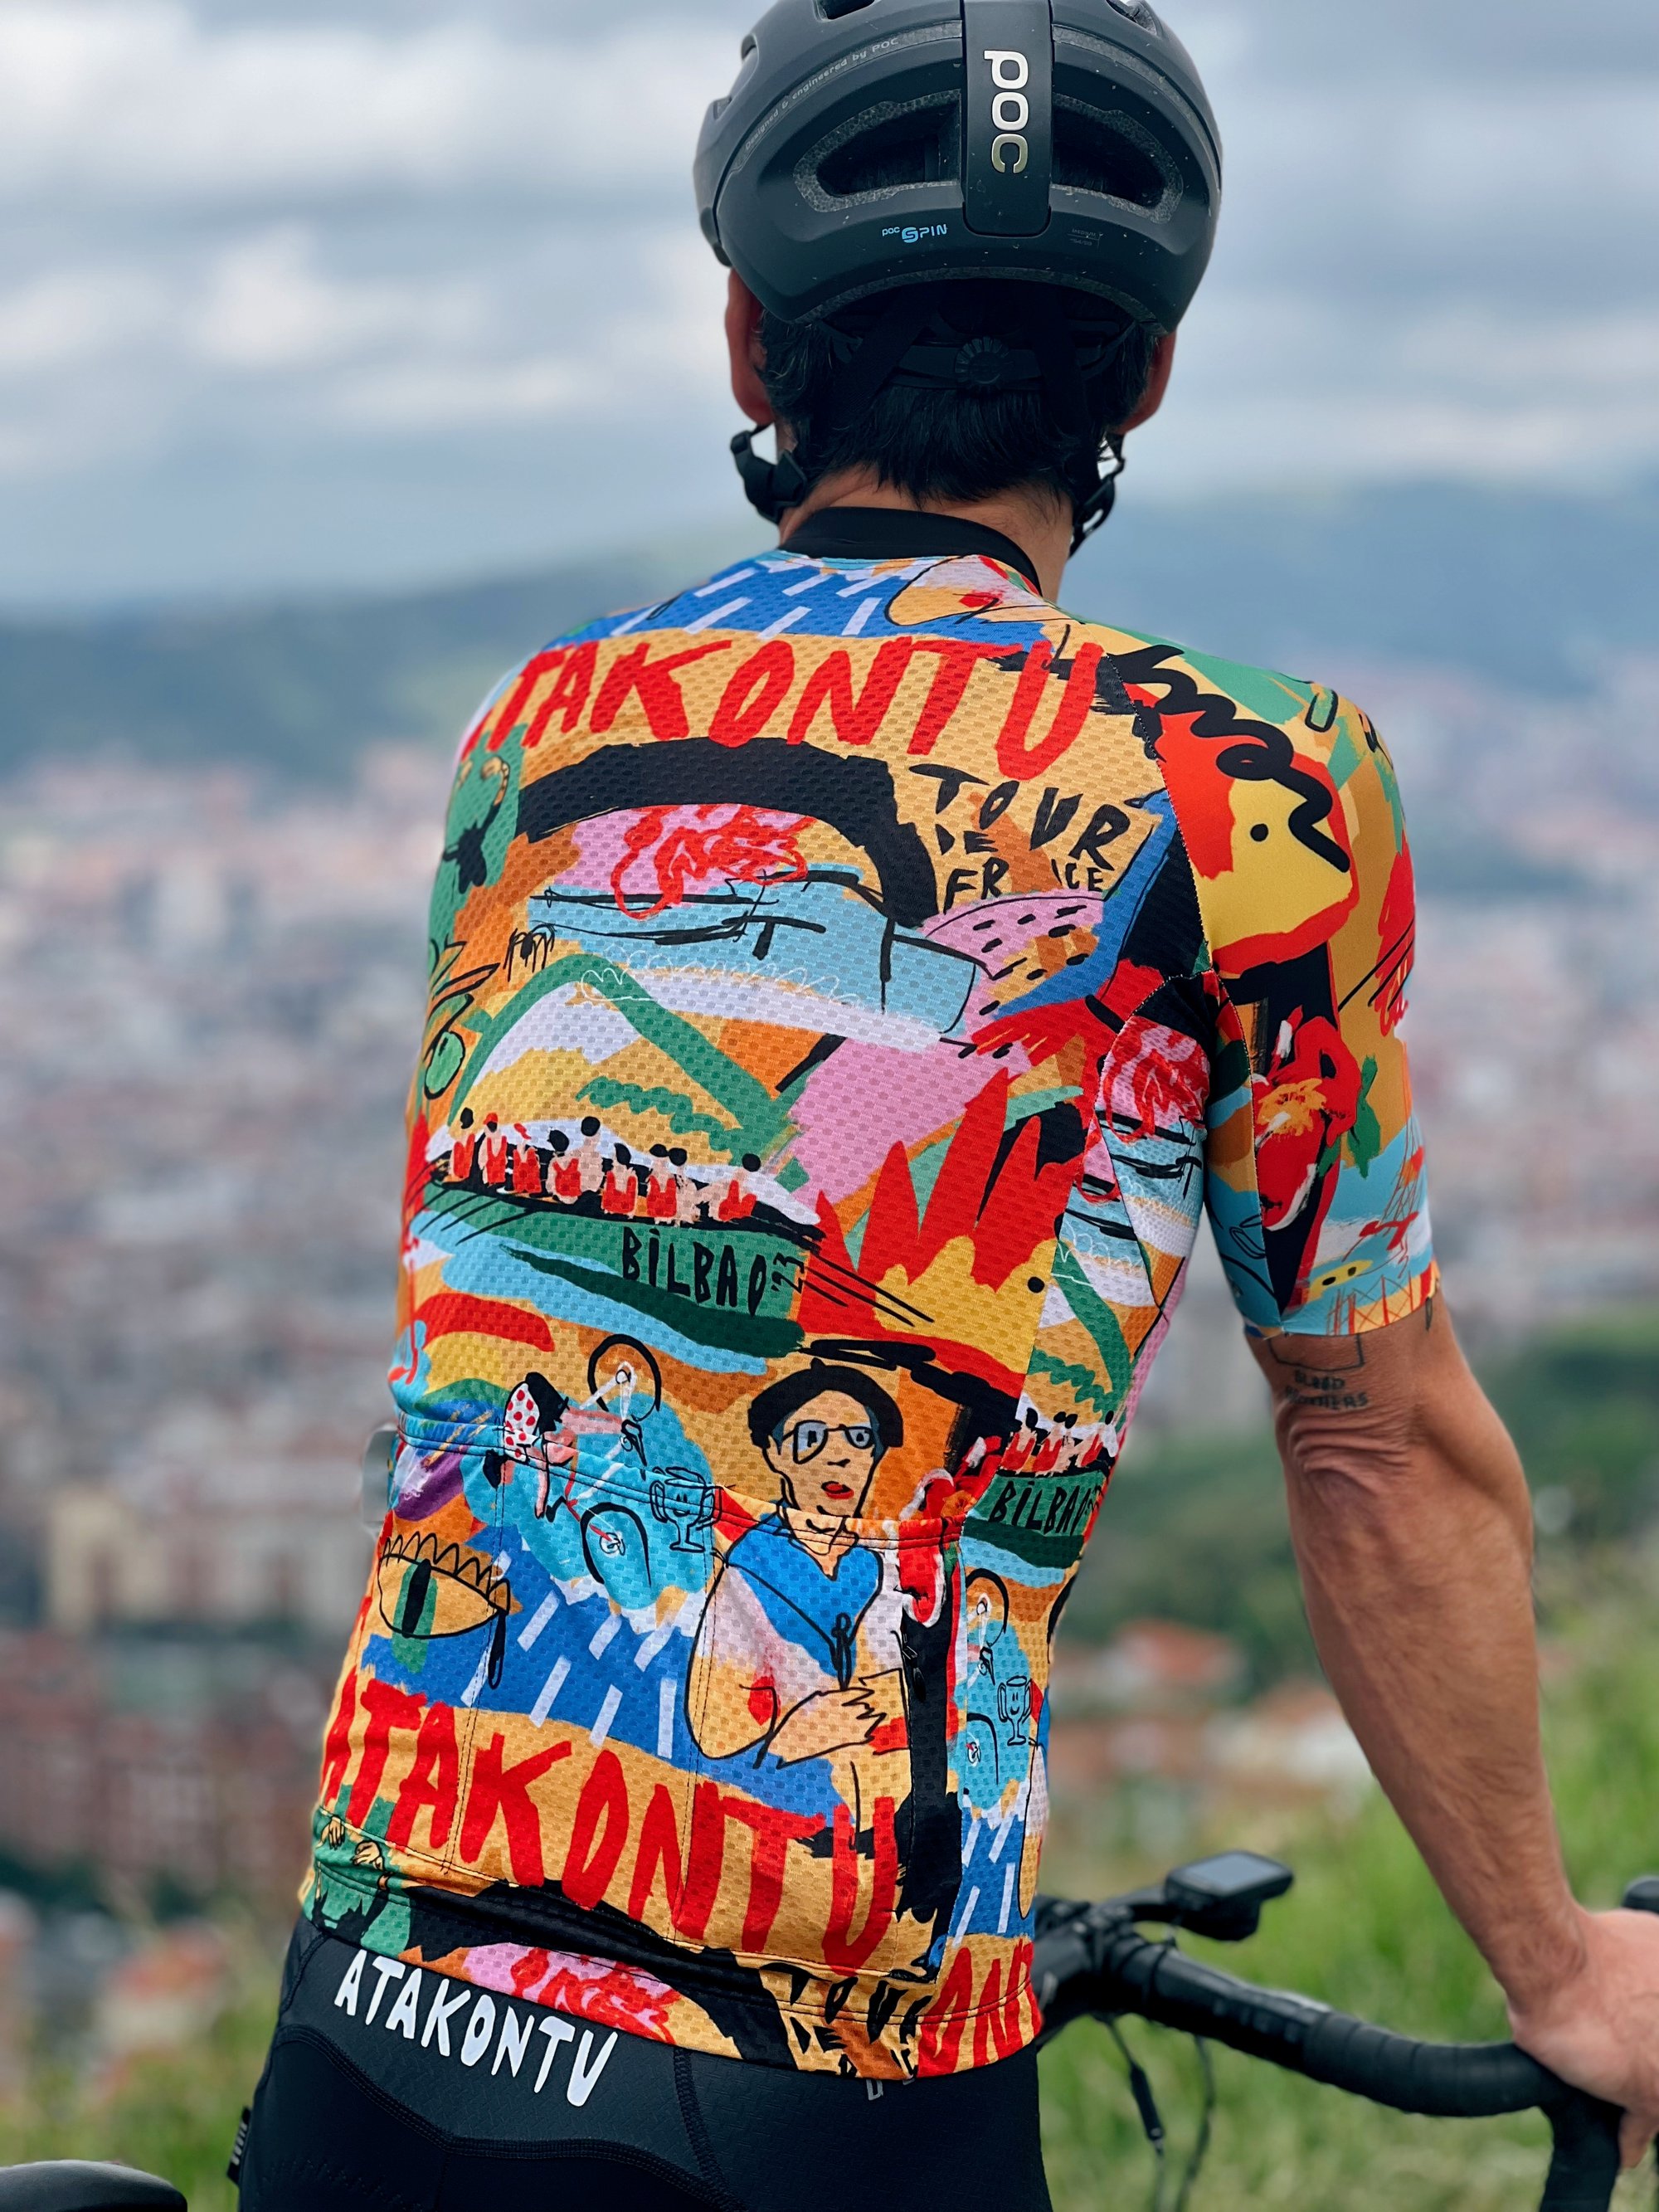 Maillot ciclismo “Bilbao”